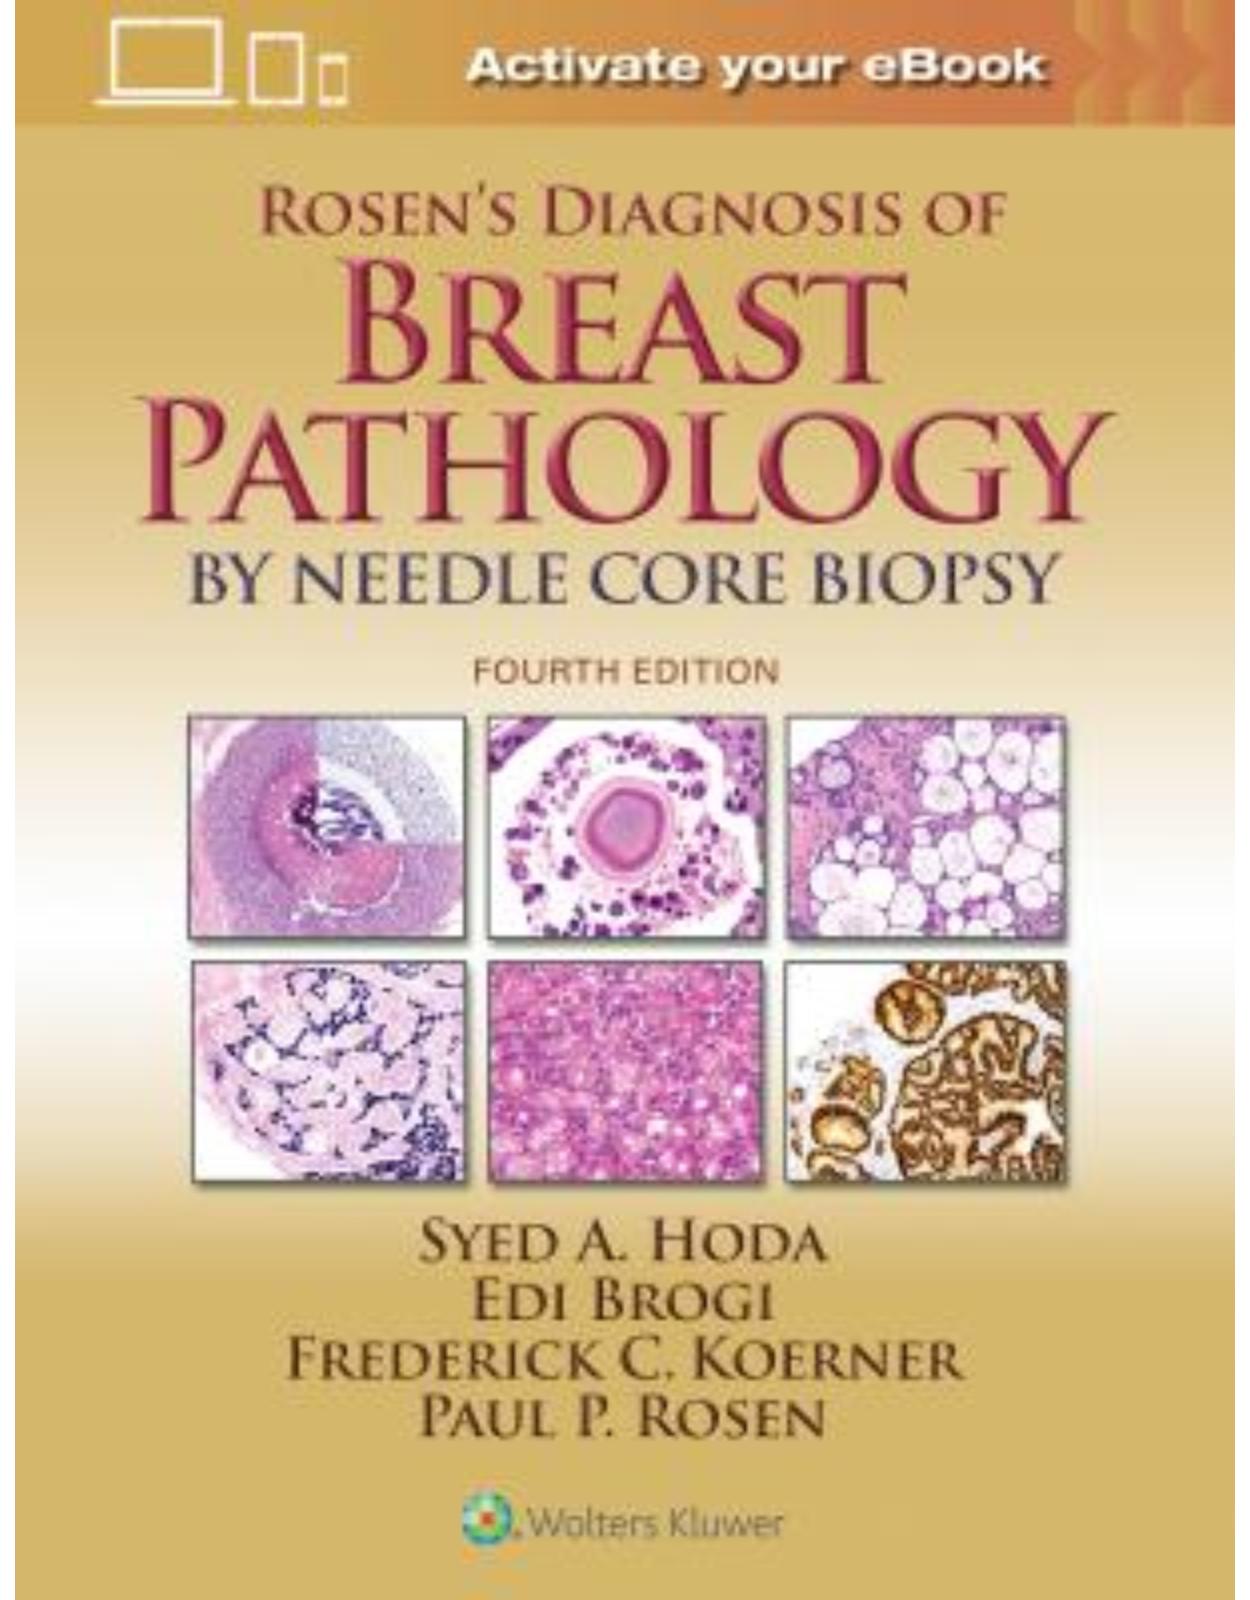 Rosen’s Diagnosis of Breast Pathology by Needle Core Biopsy, 4e 